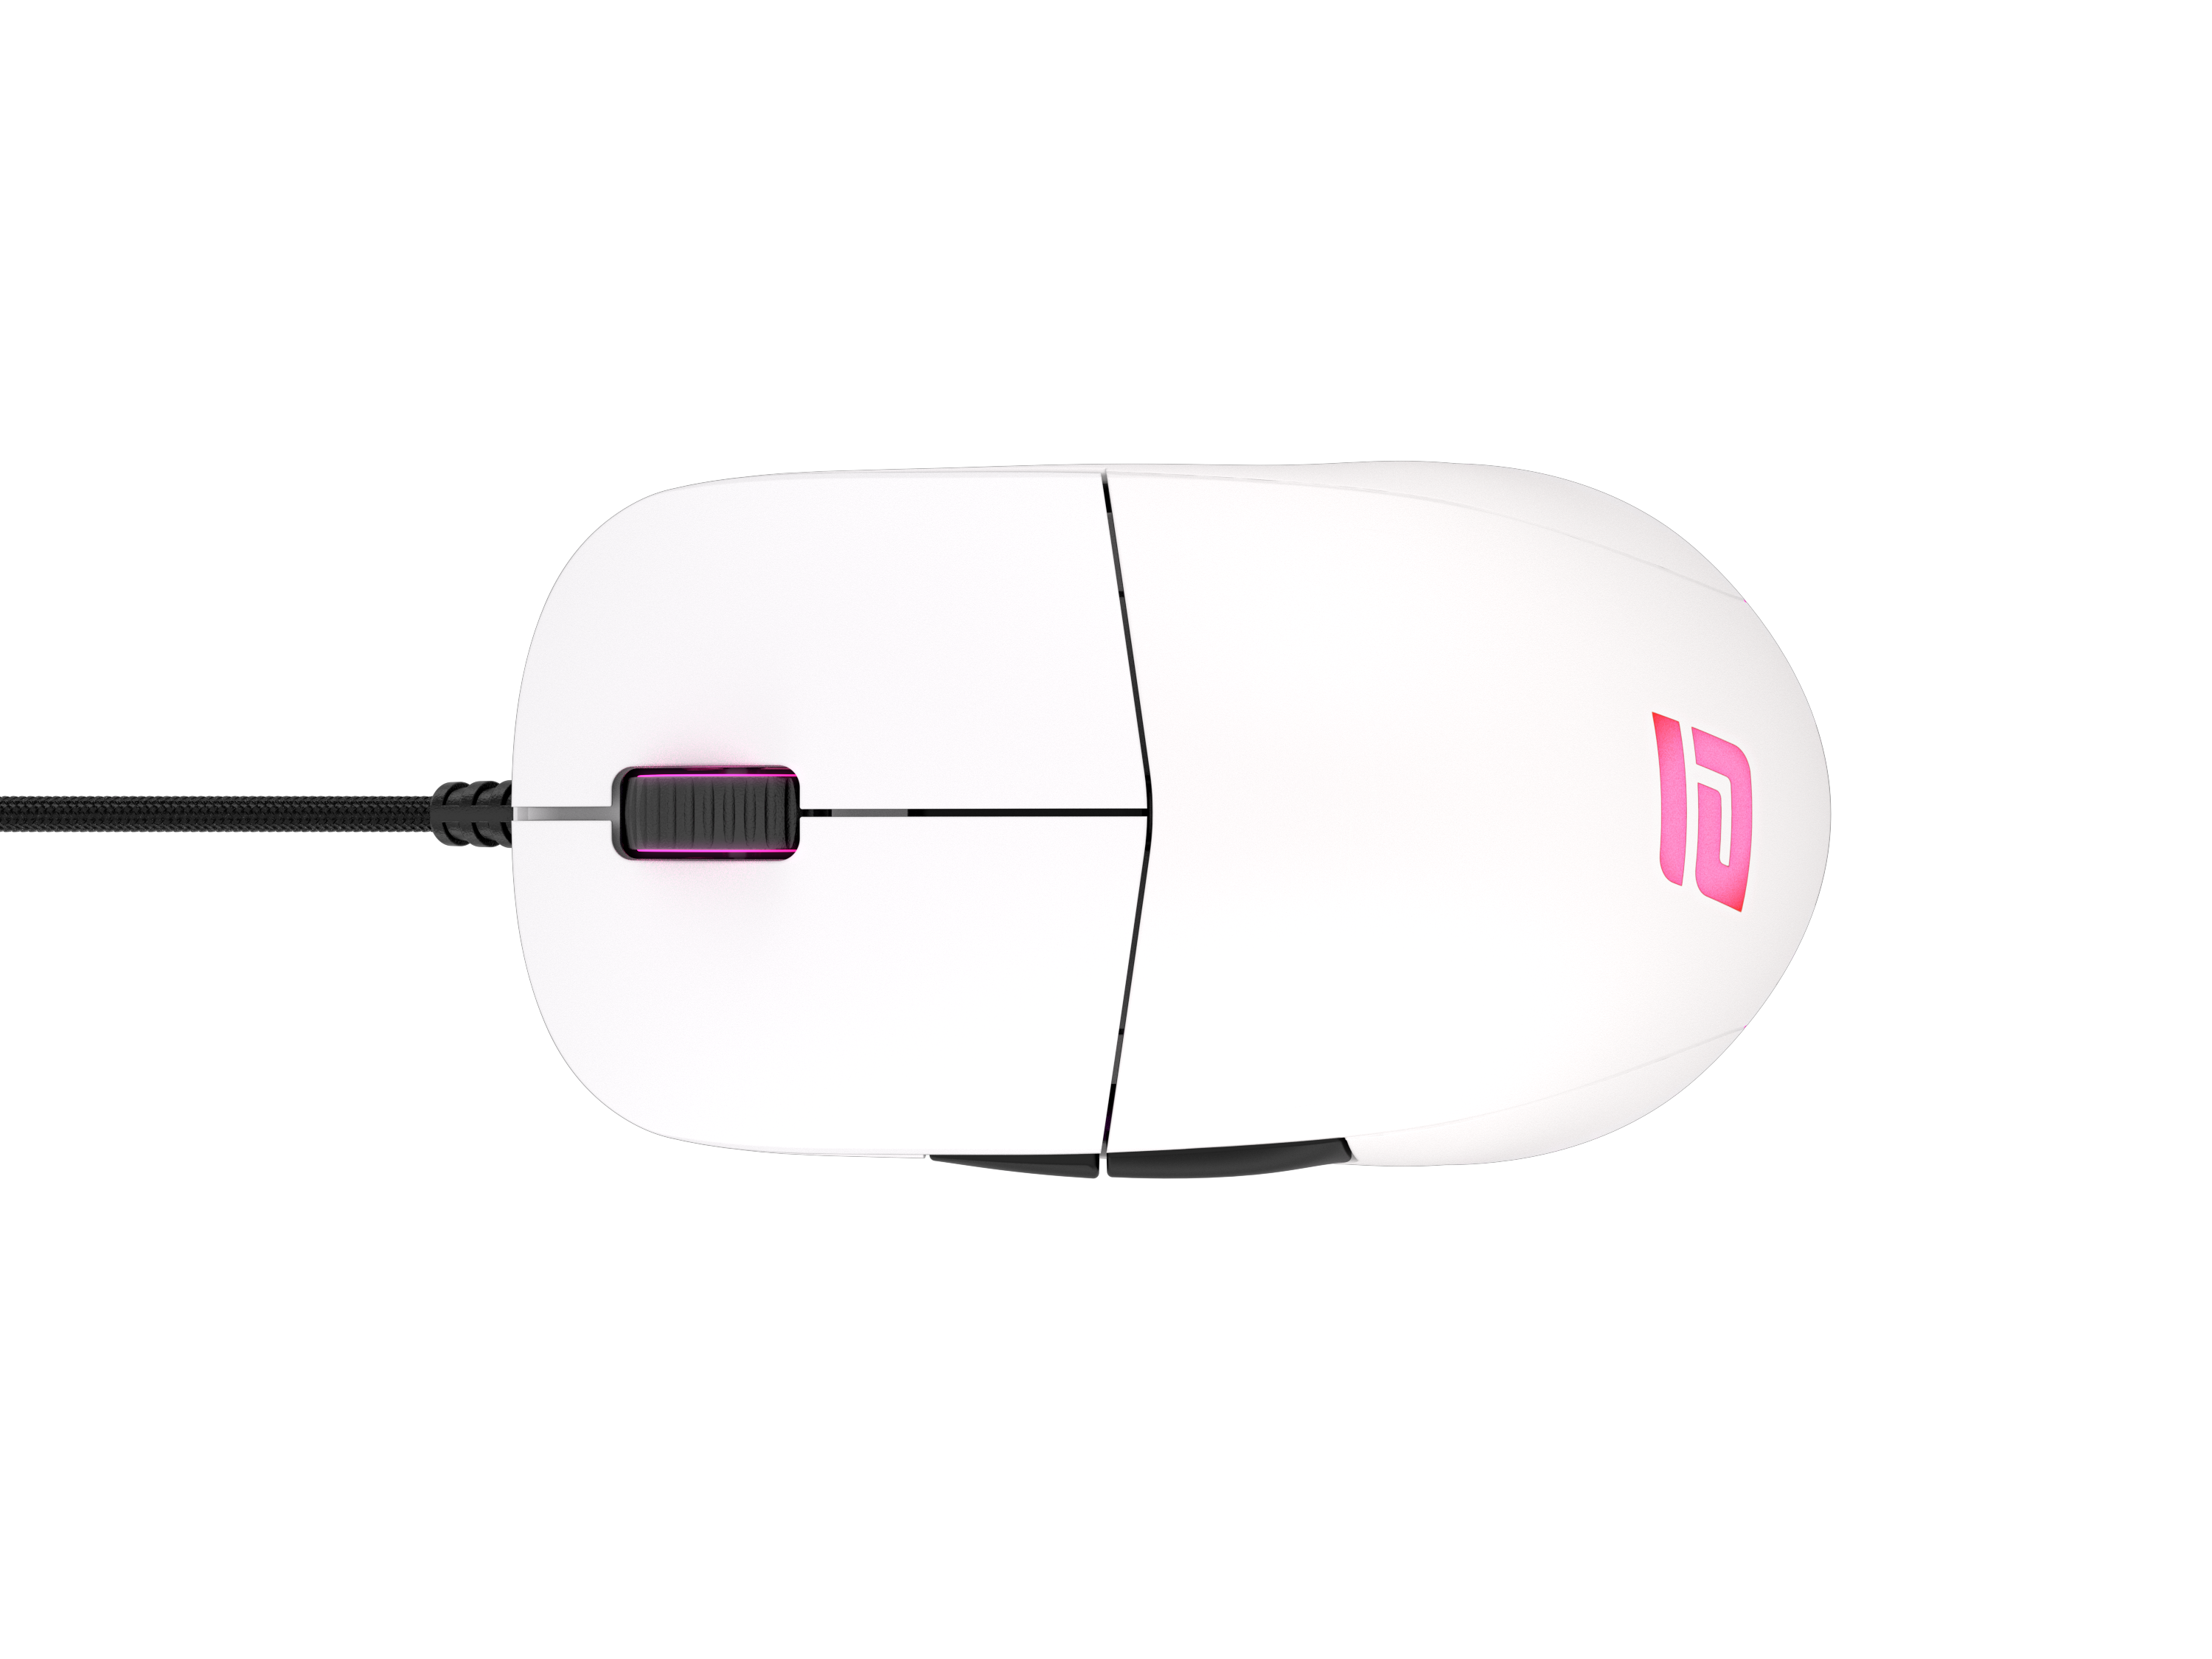 endgame-gear - XM1 RGB Gaming Mouse - White